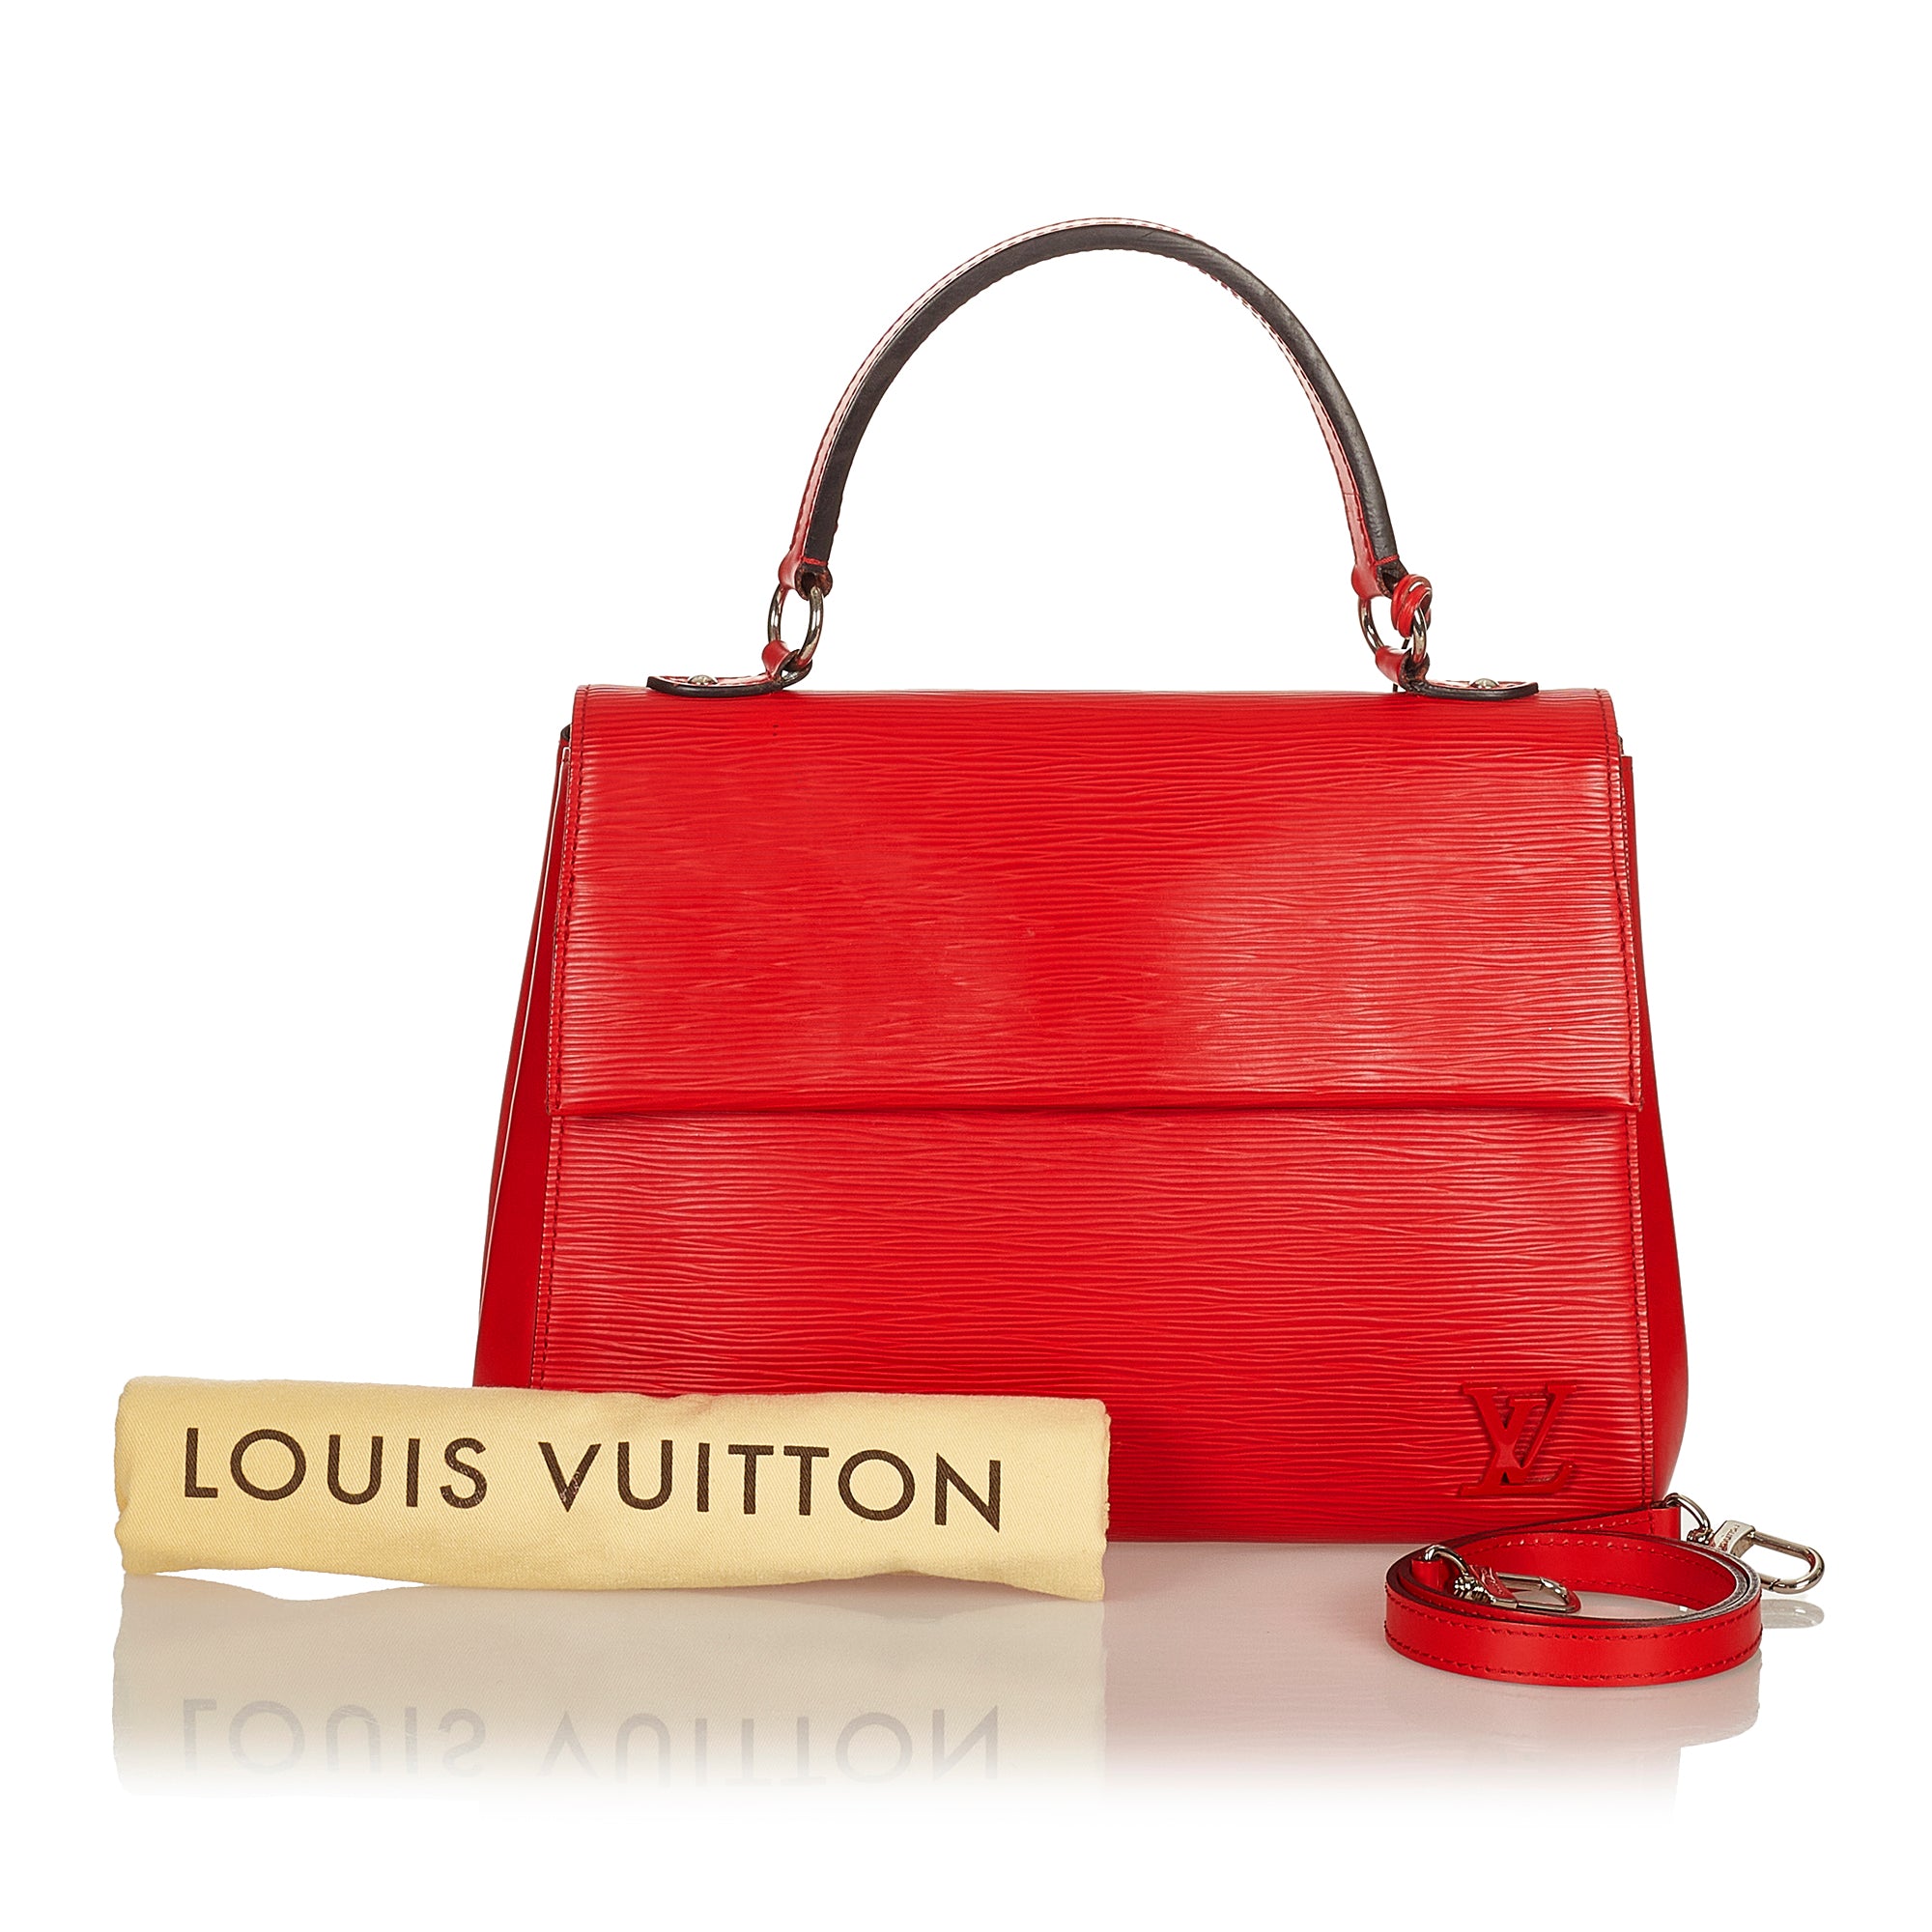 Louis Vuitton Cluny BB: First Impressions & Alma BB Comparison